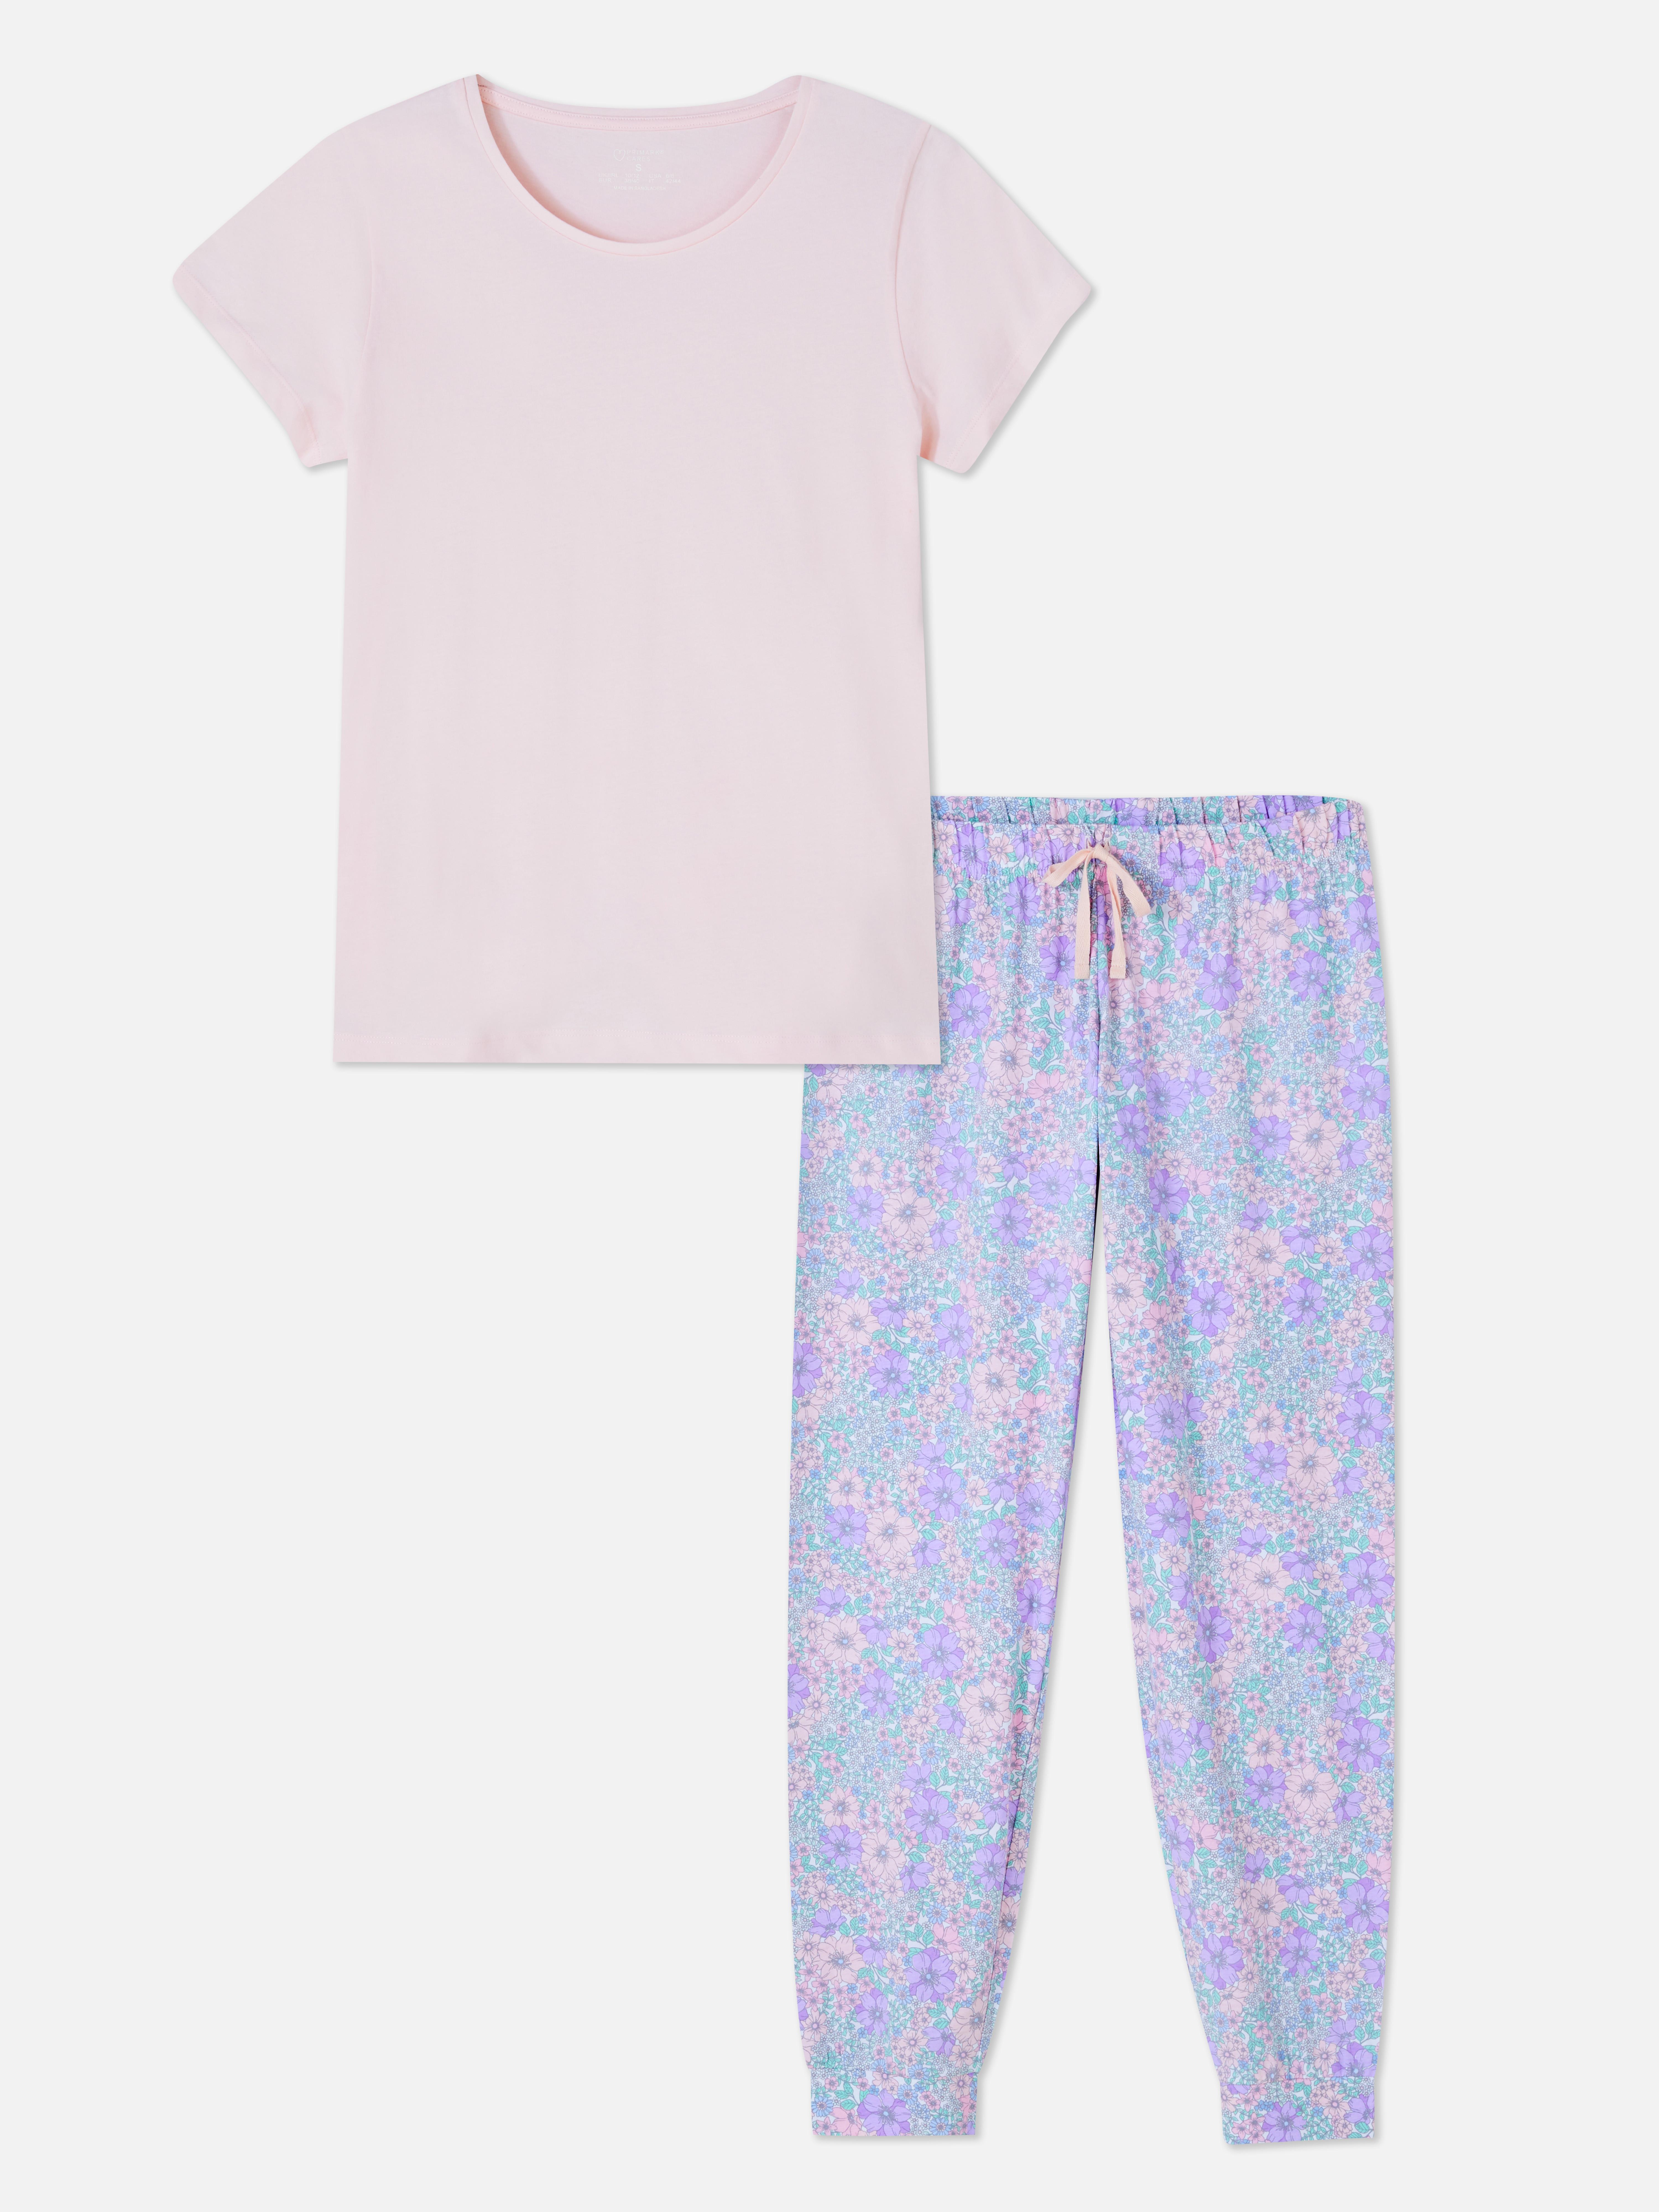 Ladies Primark Watermelon Cami Vest and Shorts Pyjama Set PJS Summer Cotton